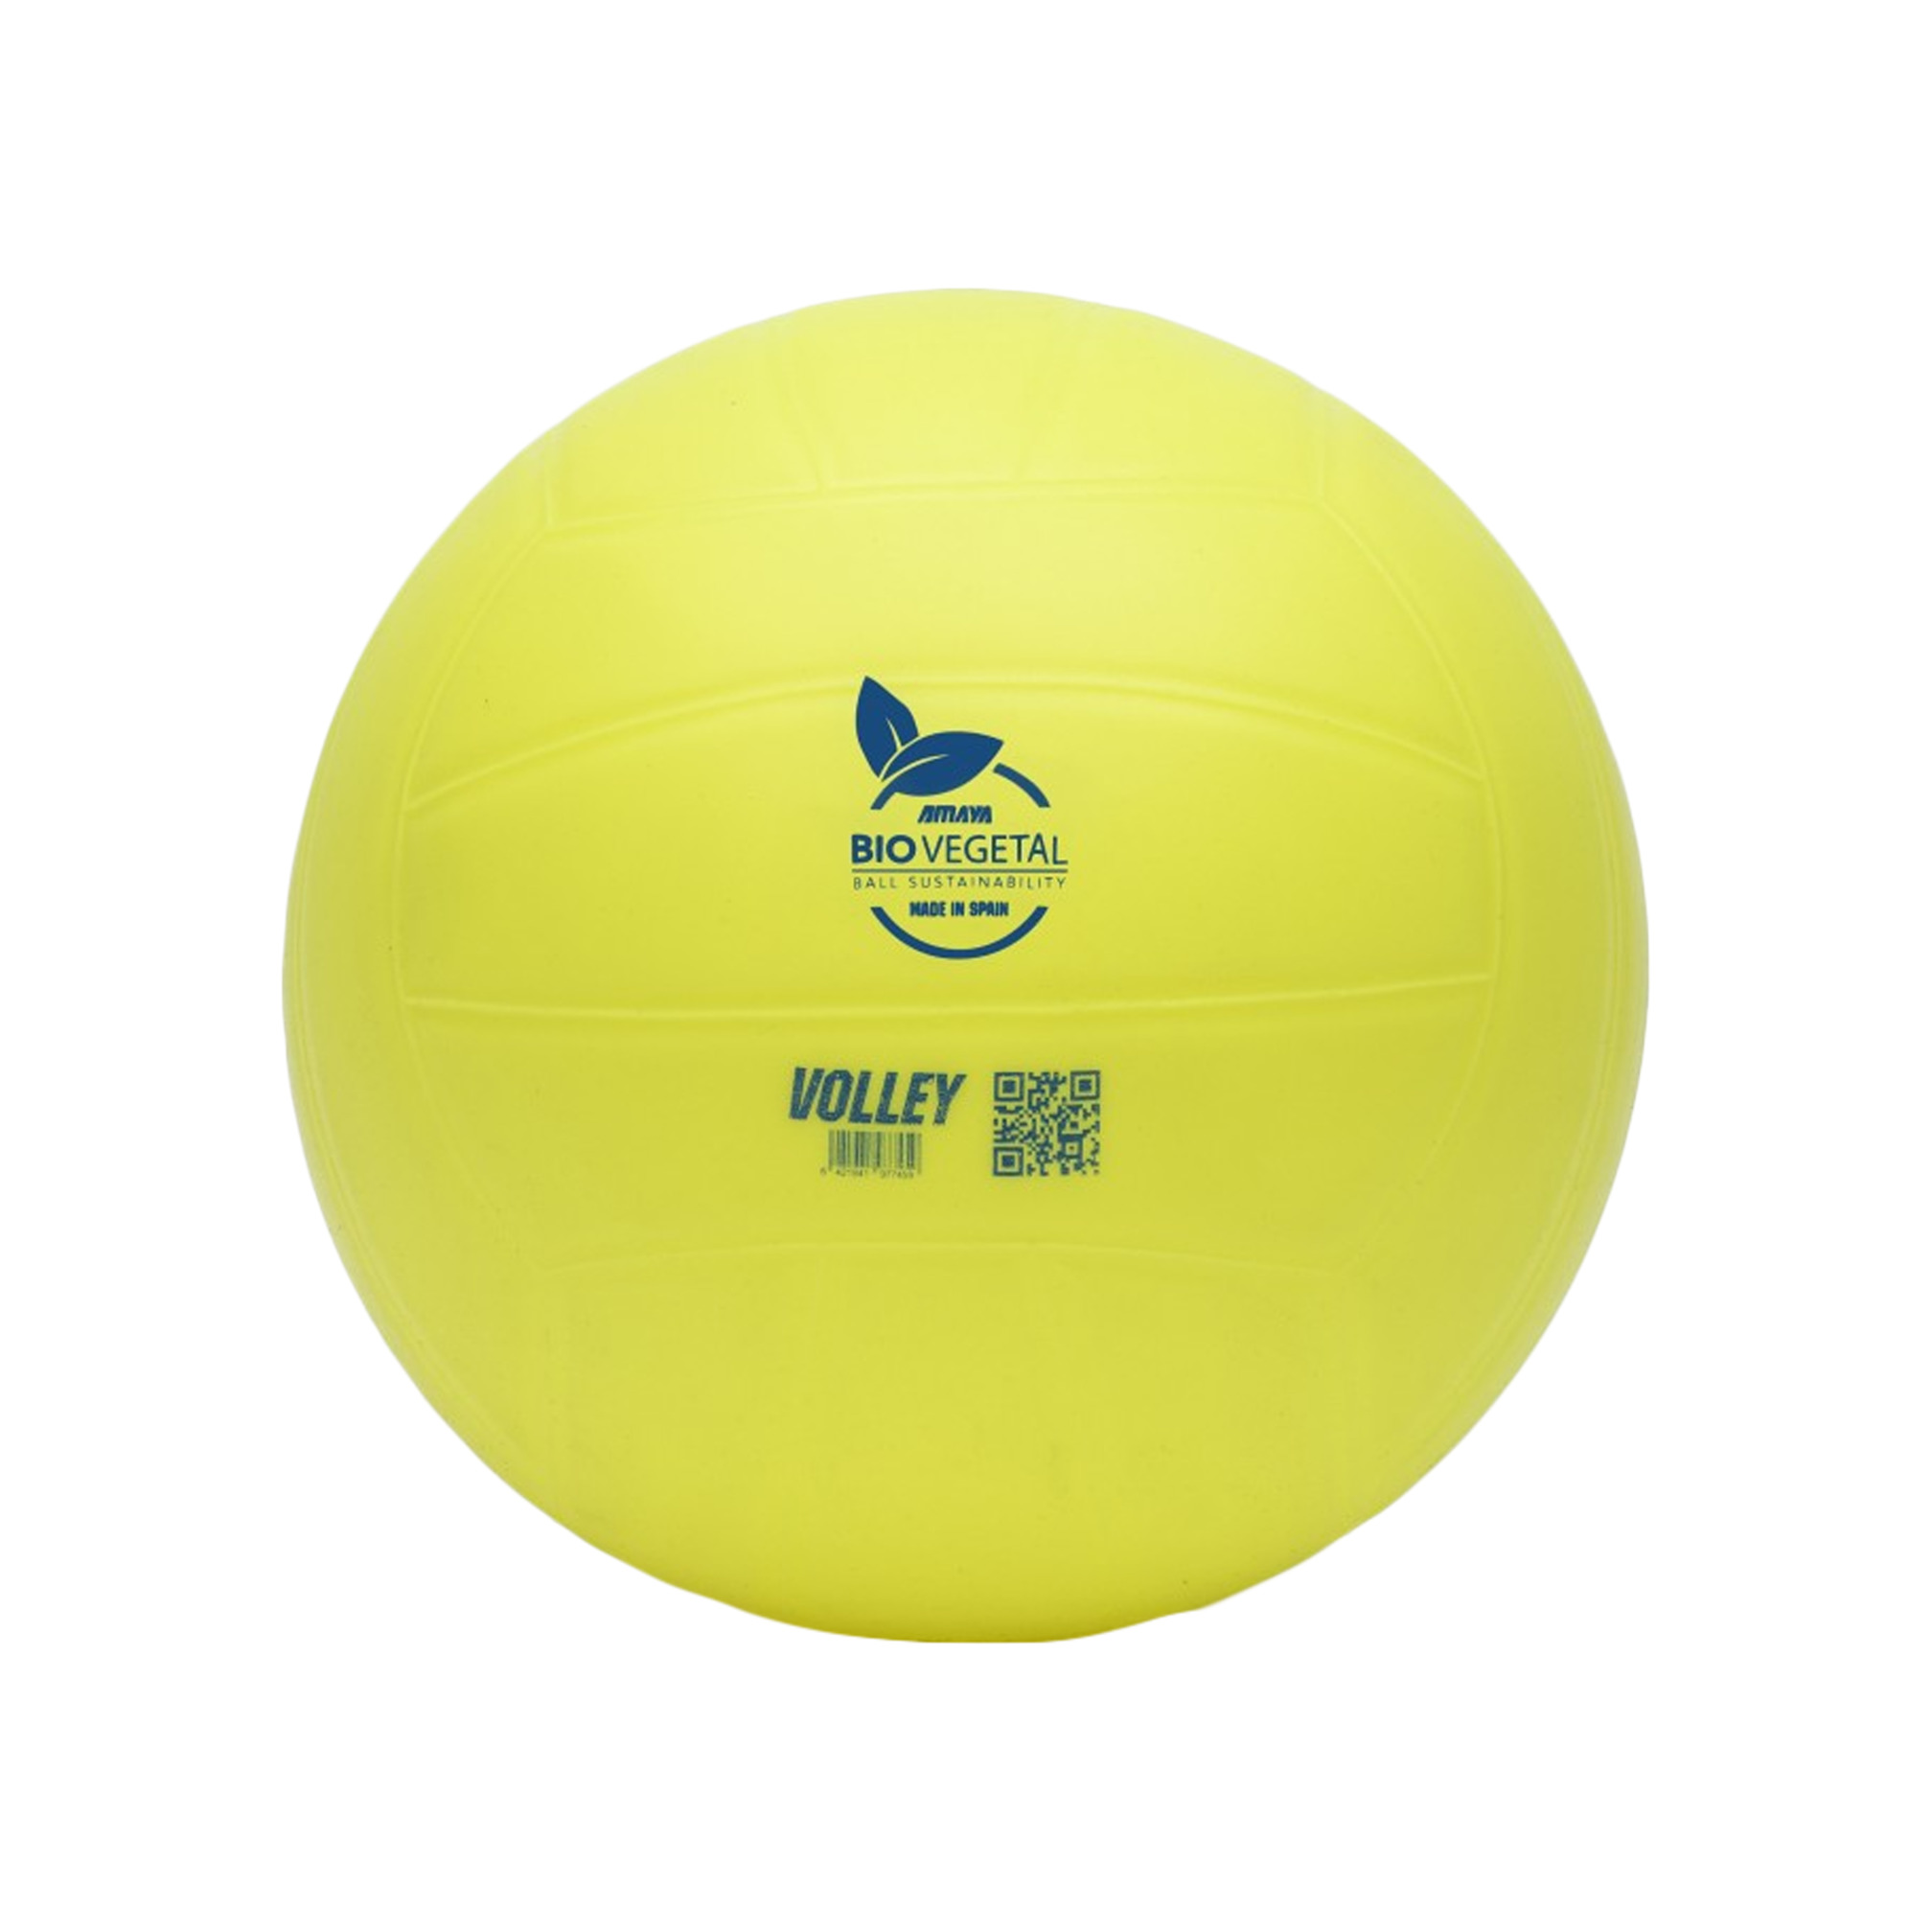 Circulaire volleybal geel ø 210 mm